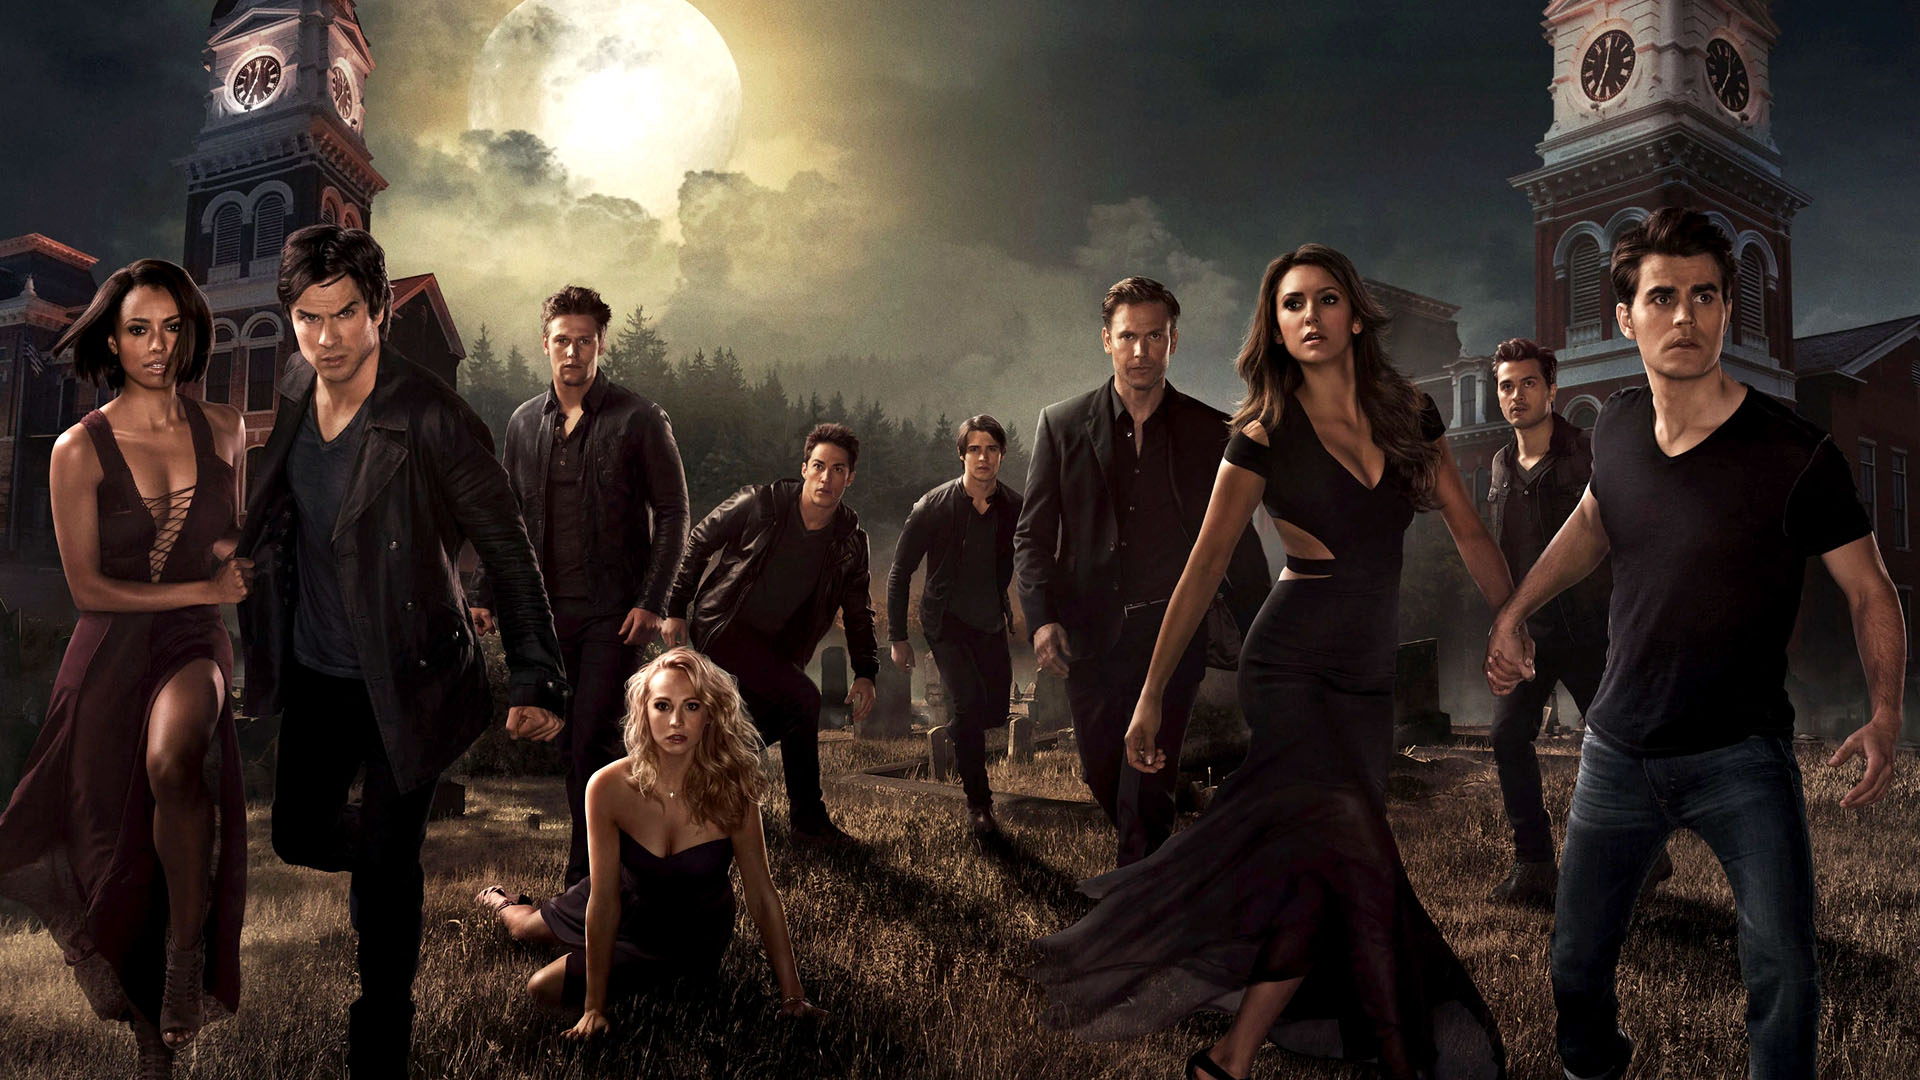 The Vampire Diaries (Season 6) / The Vampire Diaries (Season 6) (2014)